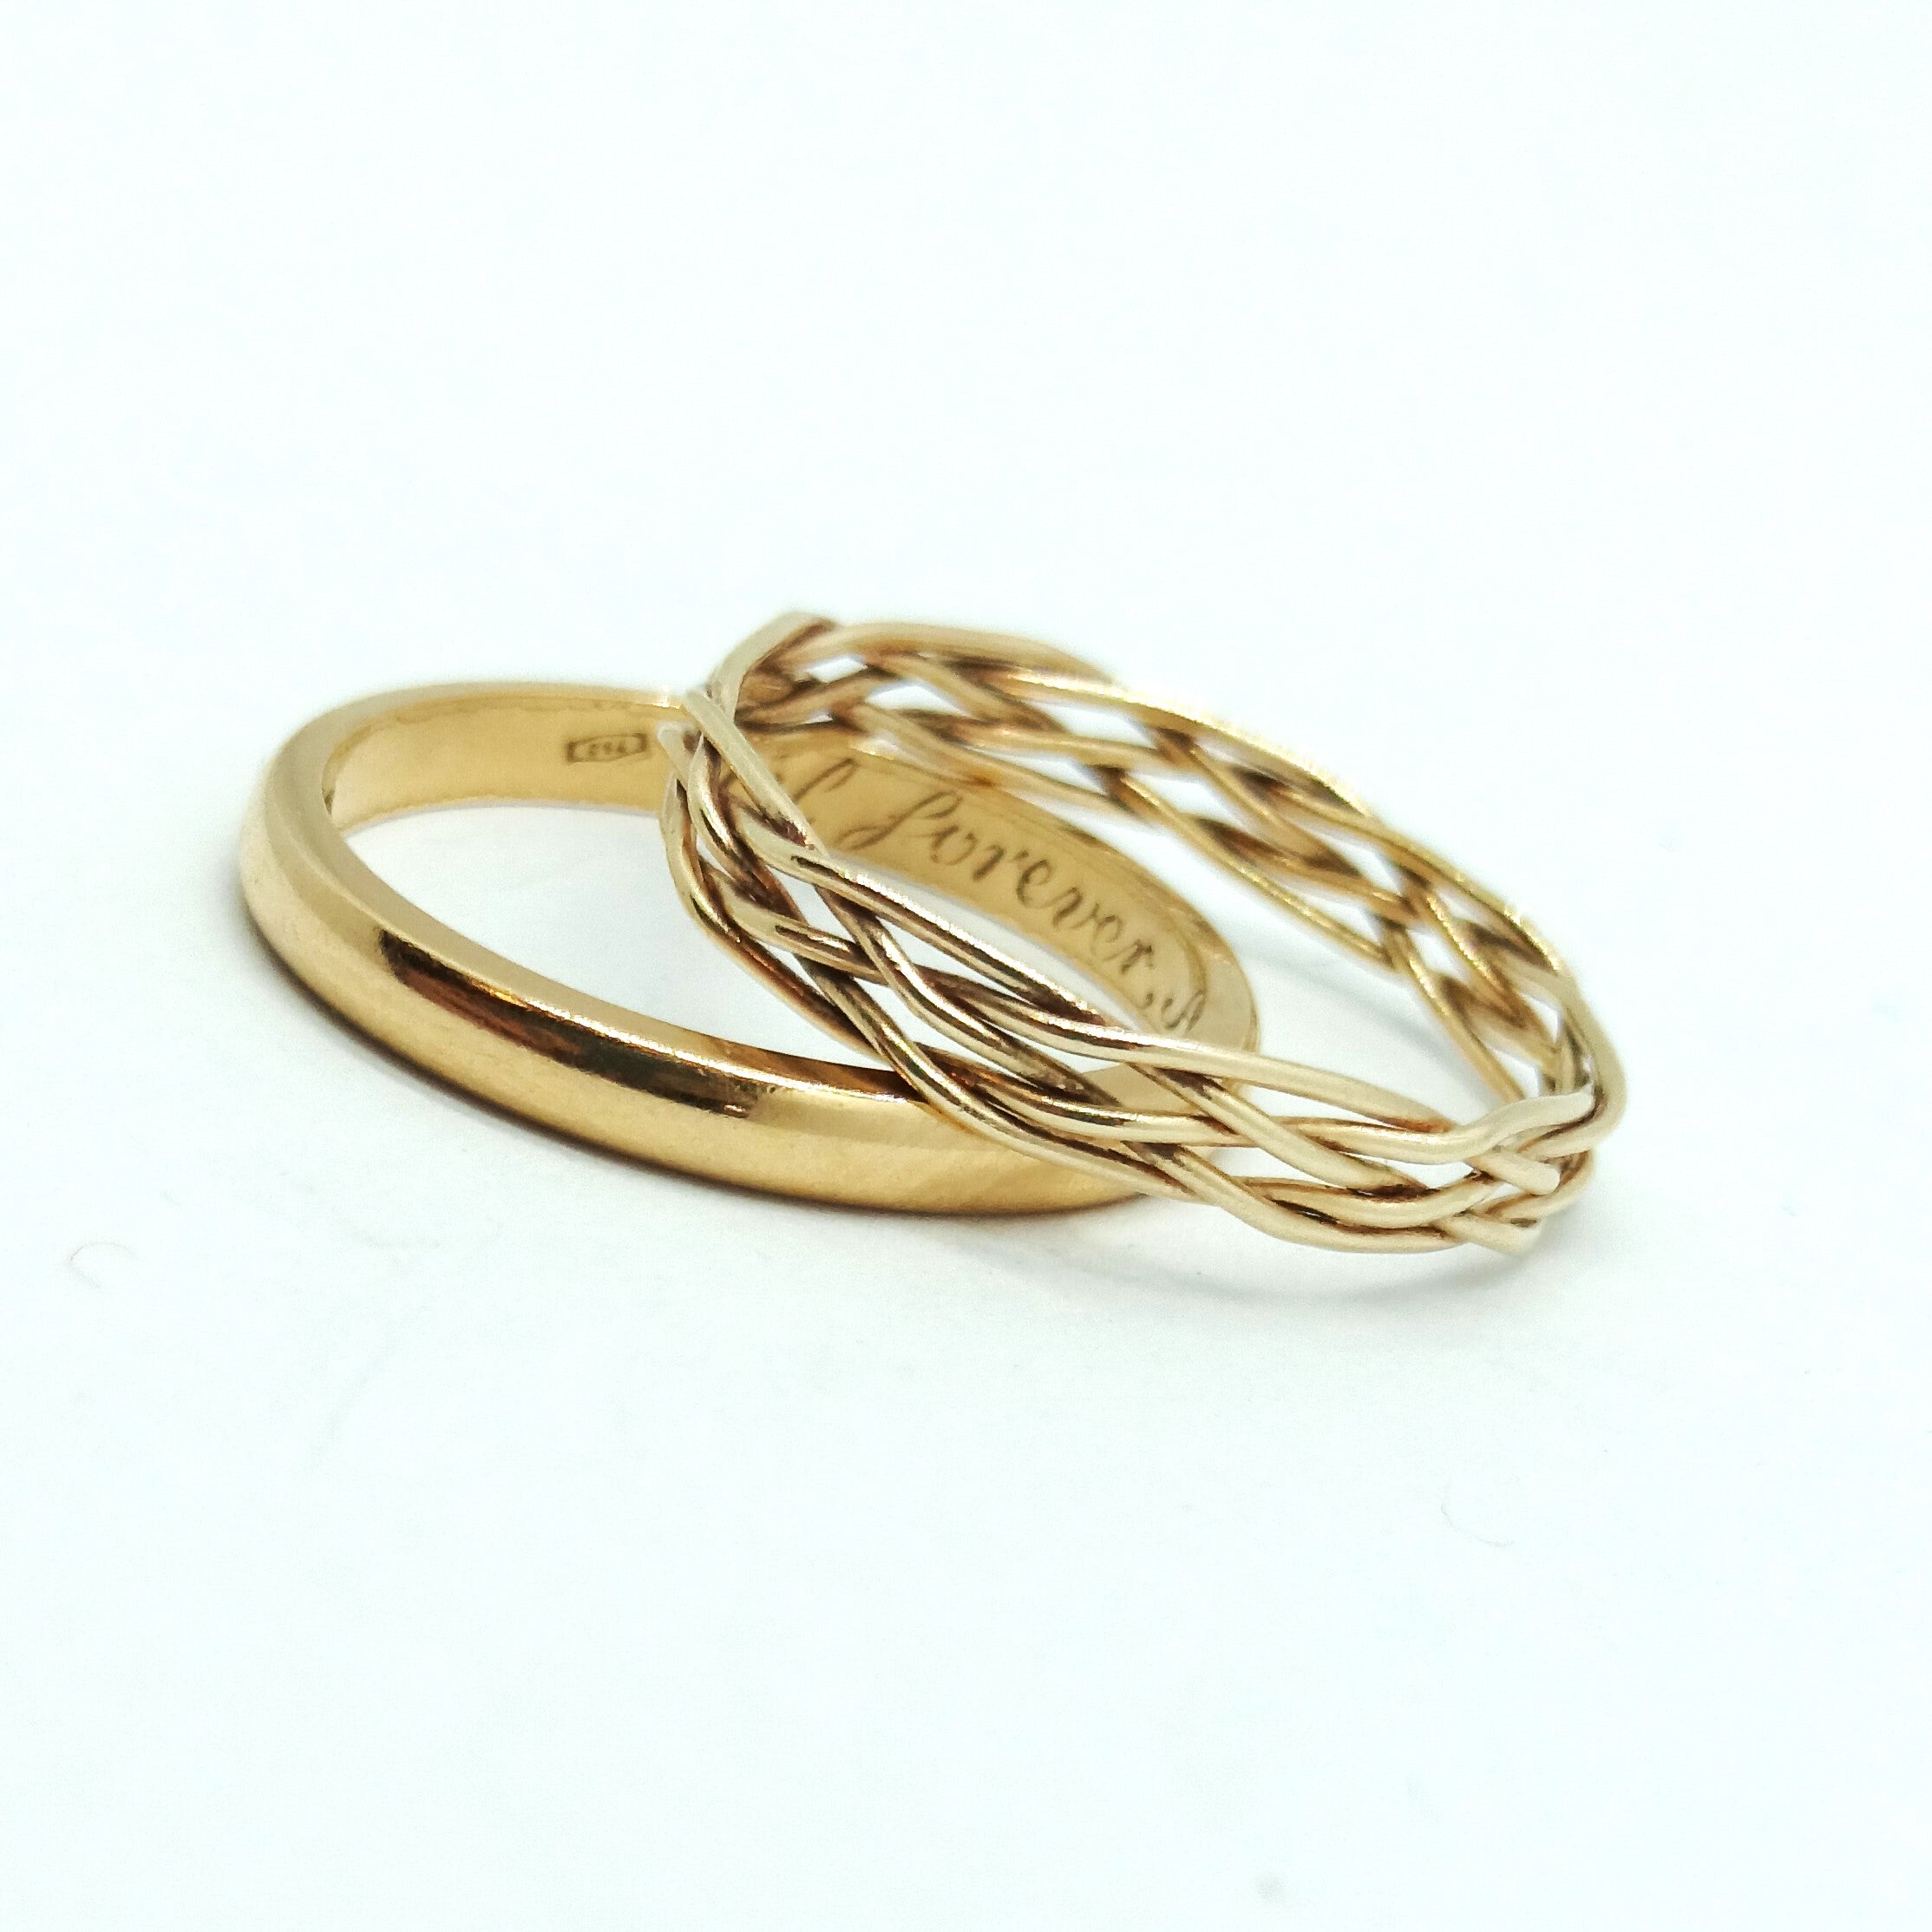 Turks Head Knot Ring, Gold - 1 strand